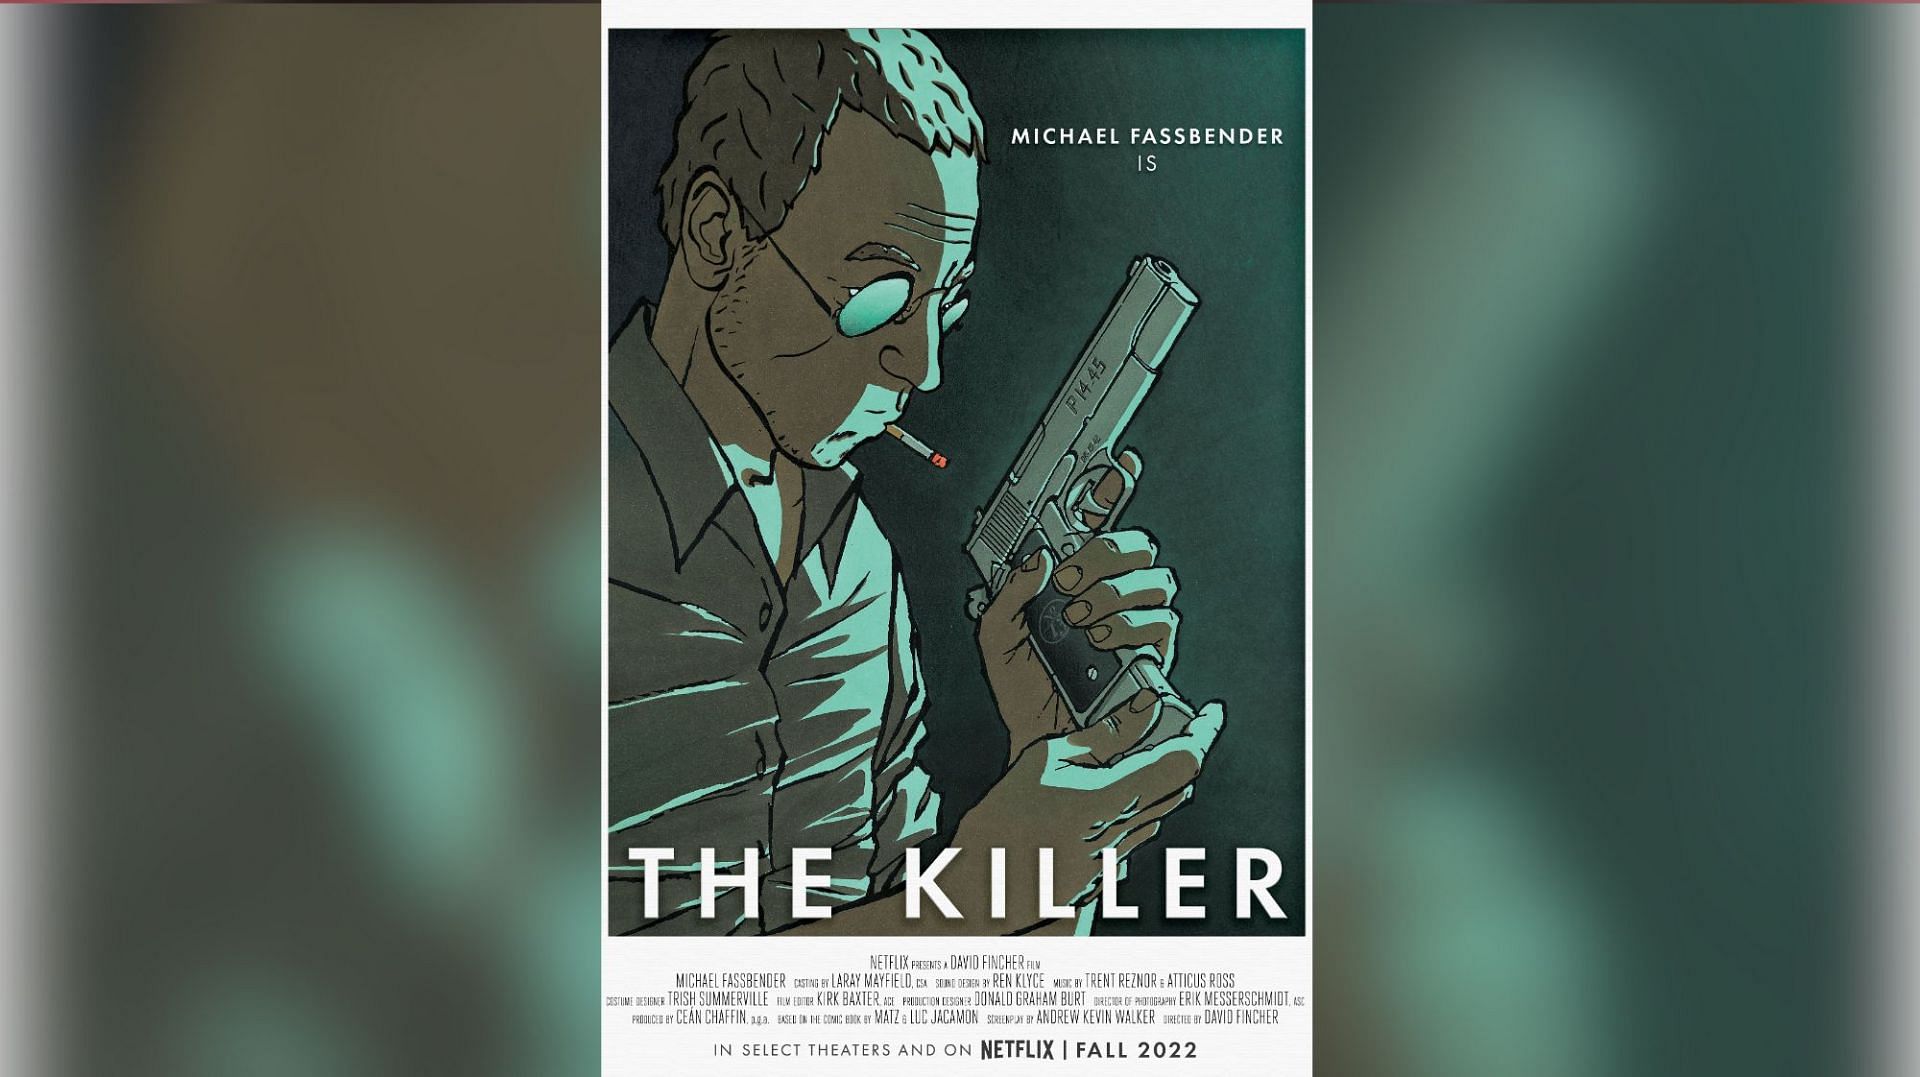 The Killer (Image via Netflix)